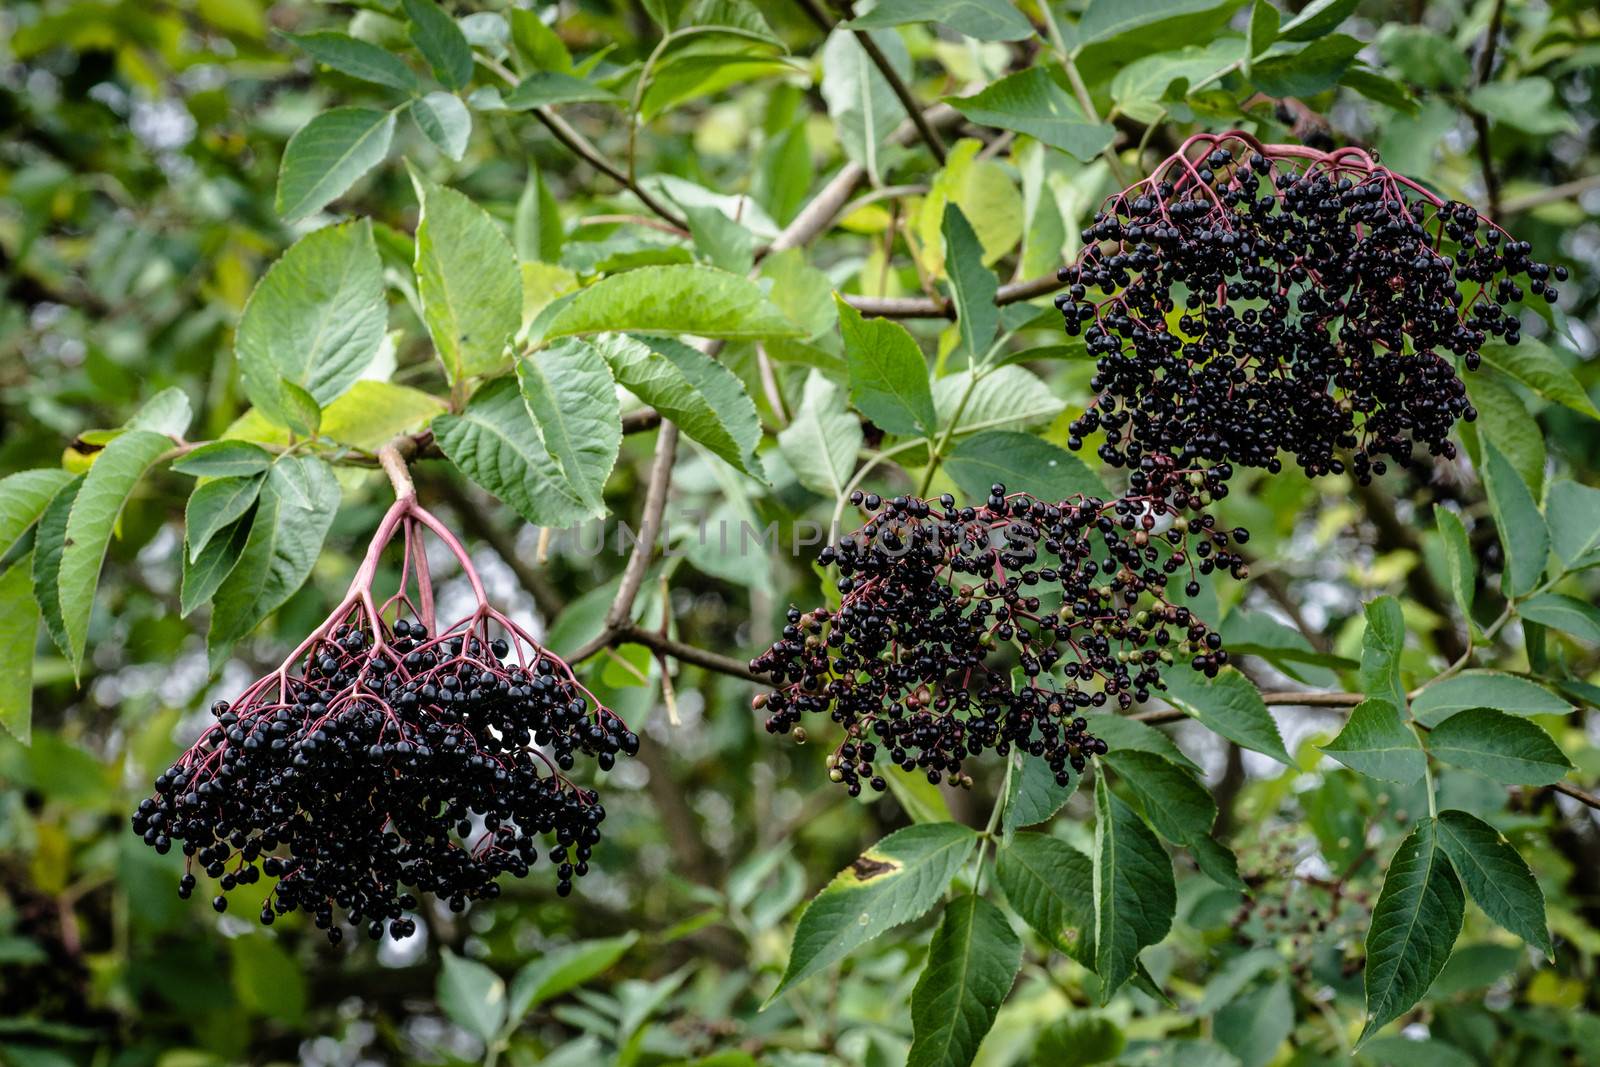 Elderberry plant by Sportactive